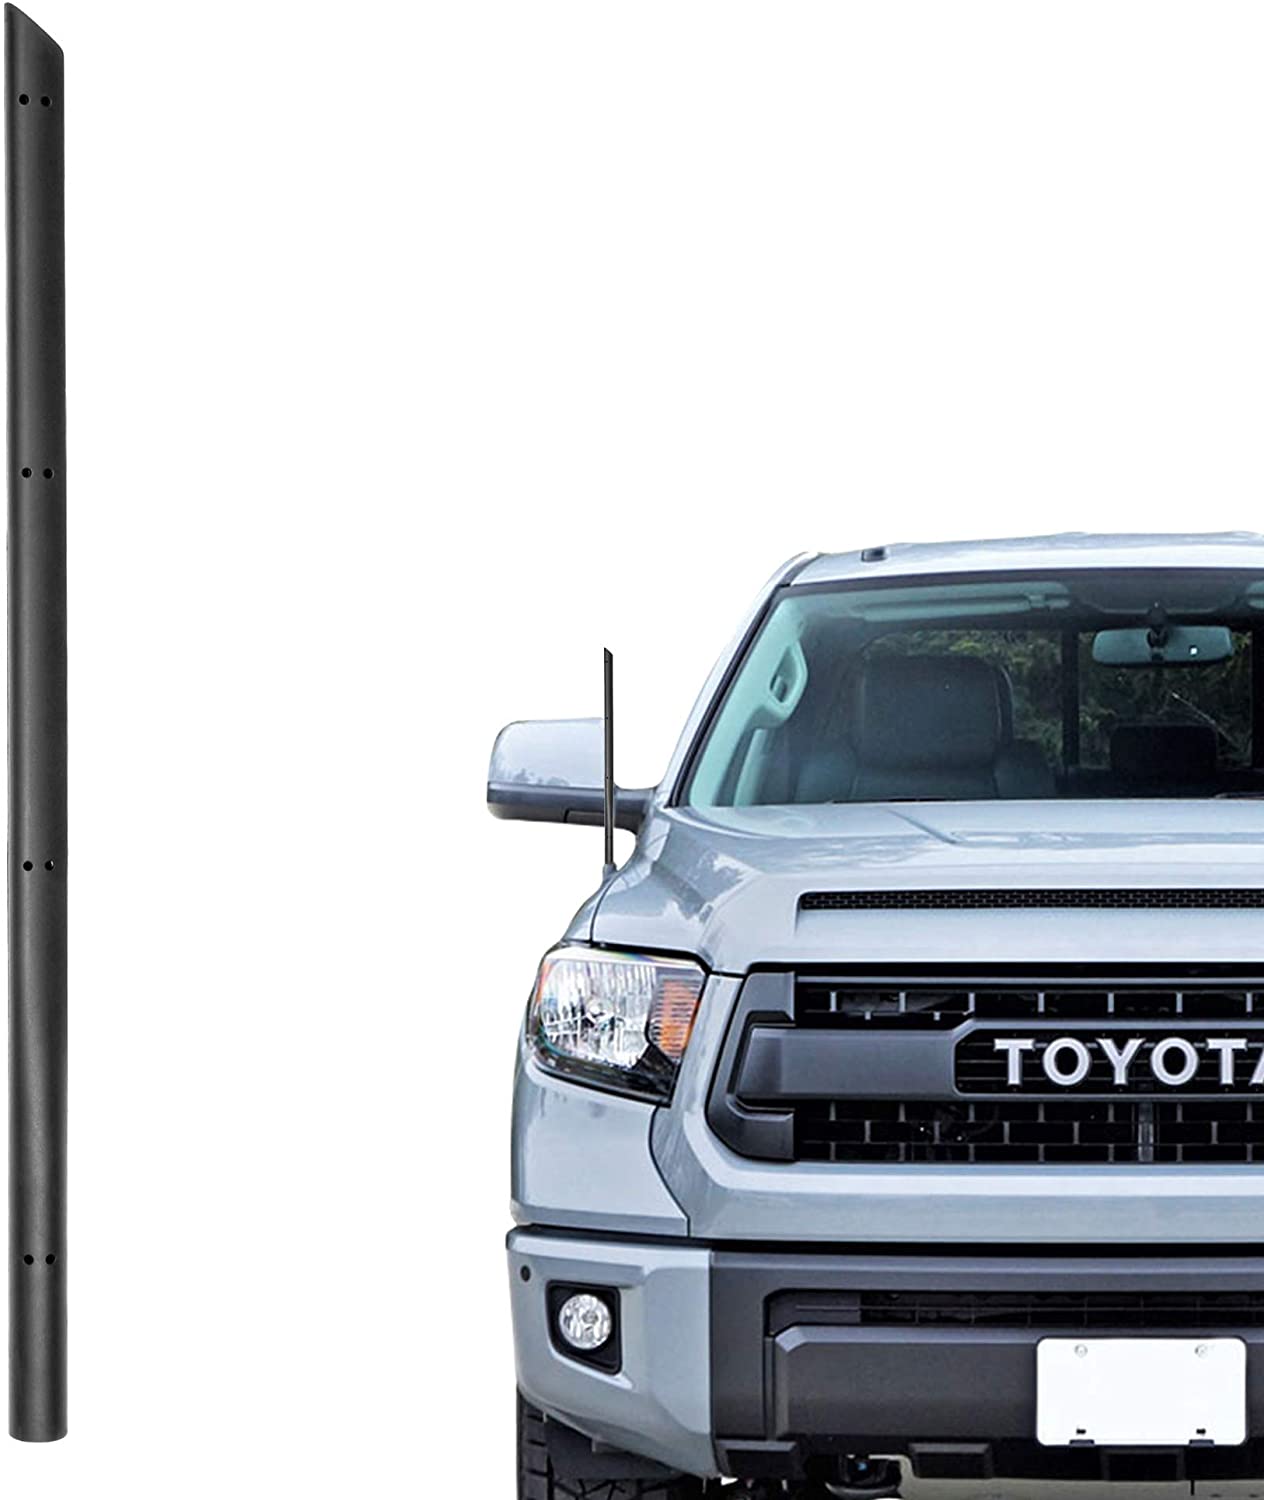 10 Best Antenna Masts For Toyota Tundra - Wonderful Engineer